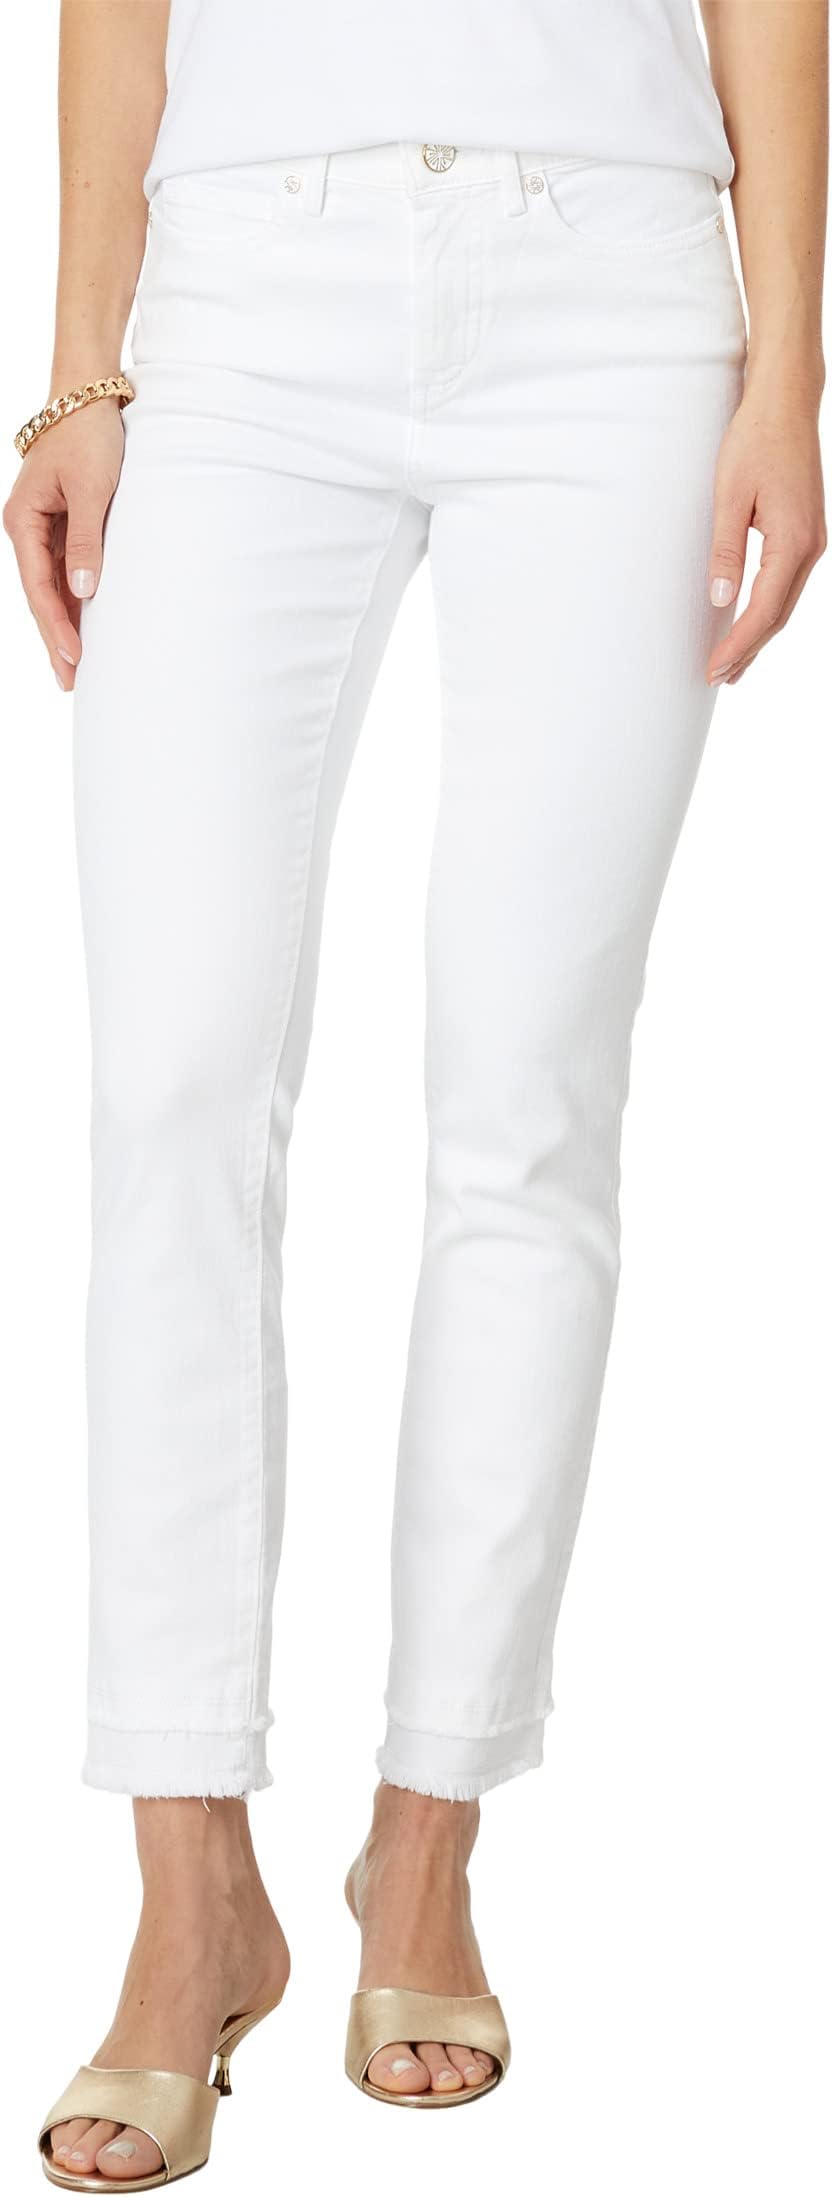 Джинсы South Ocean High-Rise Skinny Jeans in Resort White Lilly Pulitzer, цвет Resort White voxx resort